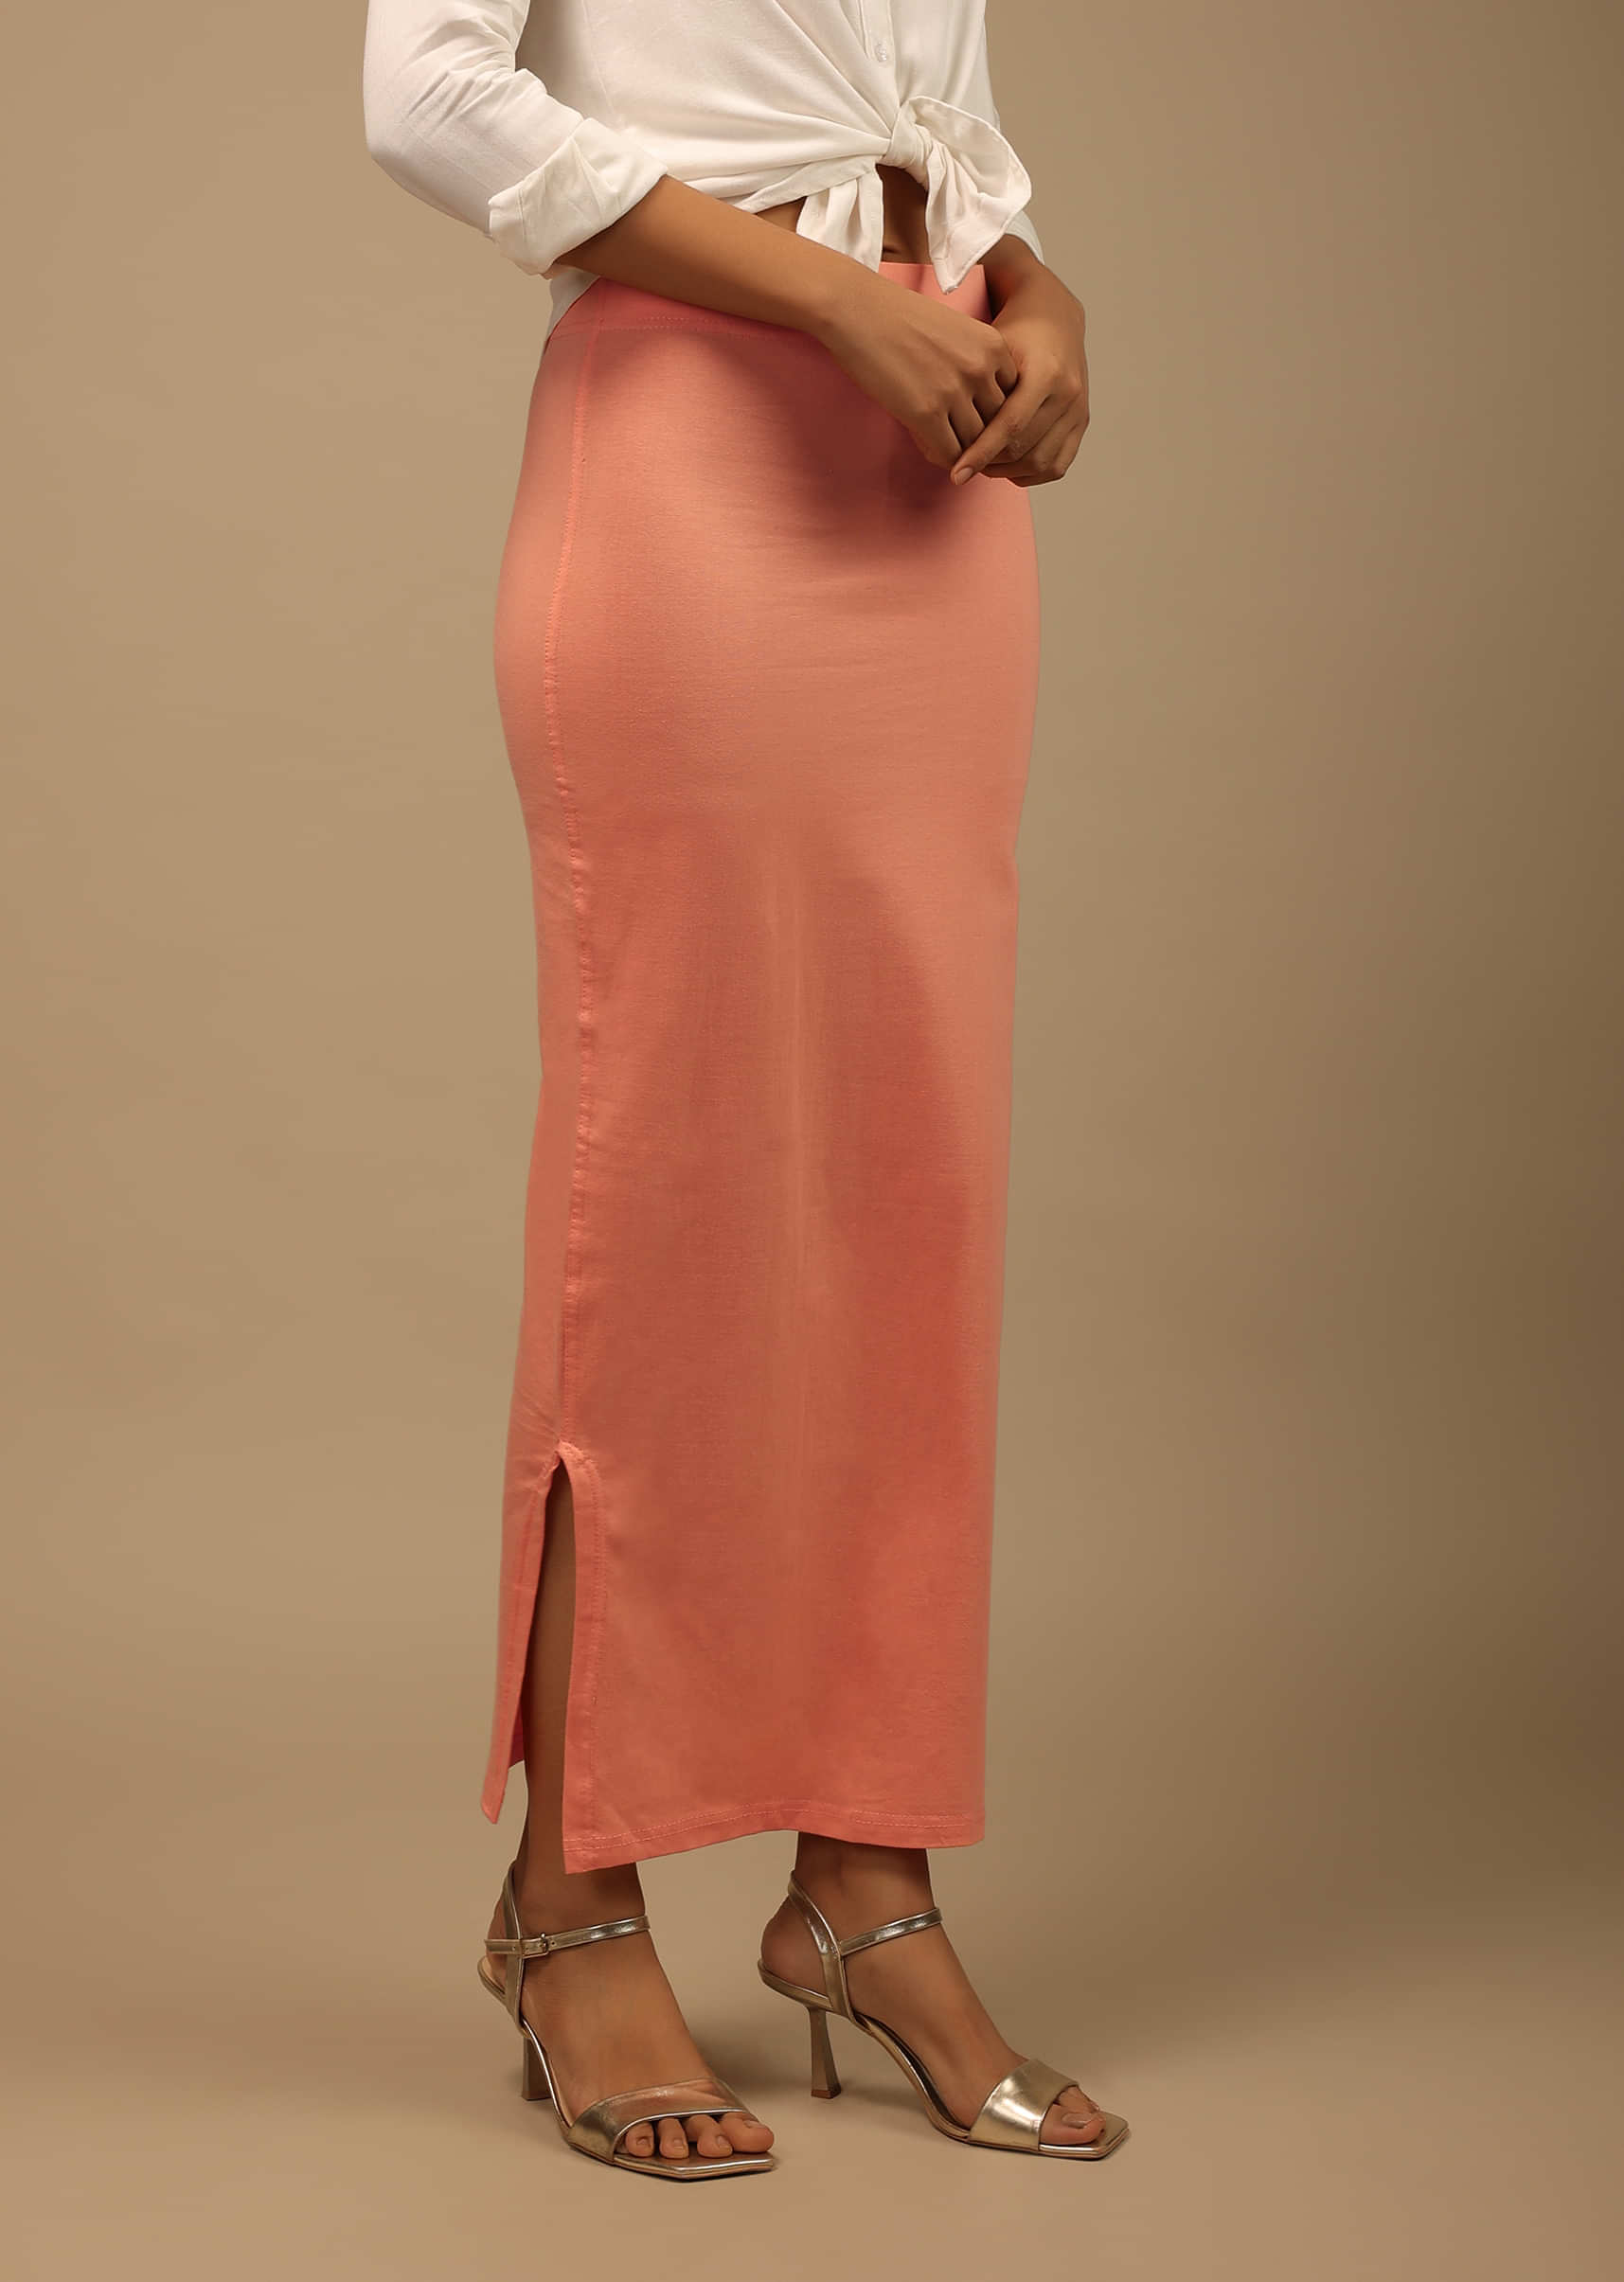 Buy BUYONN Women Peach Spandex Saree Shapewear (XXL) Online at